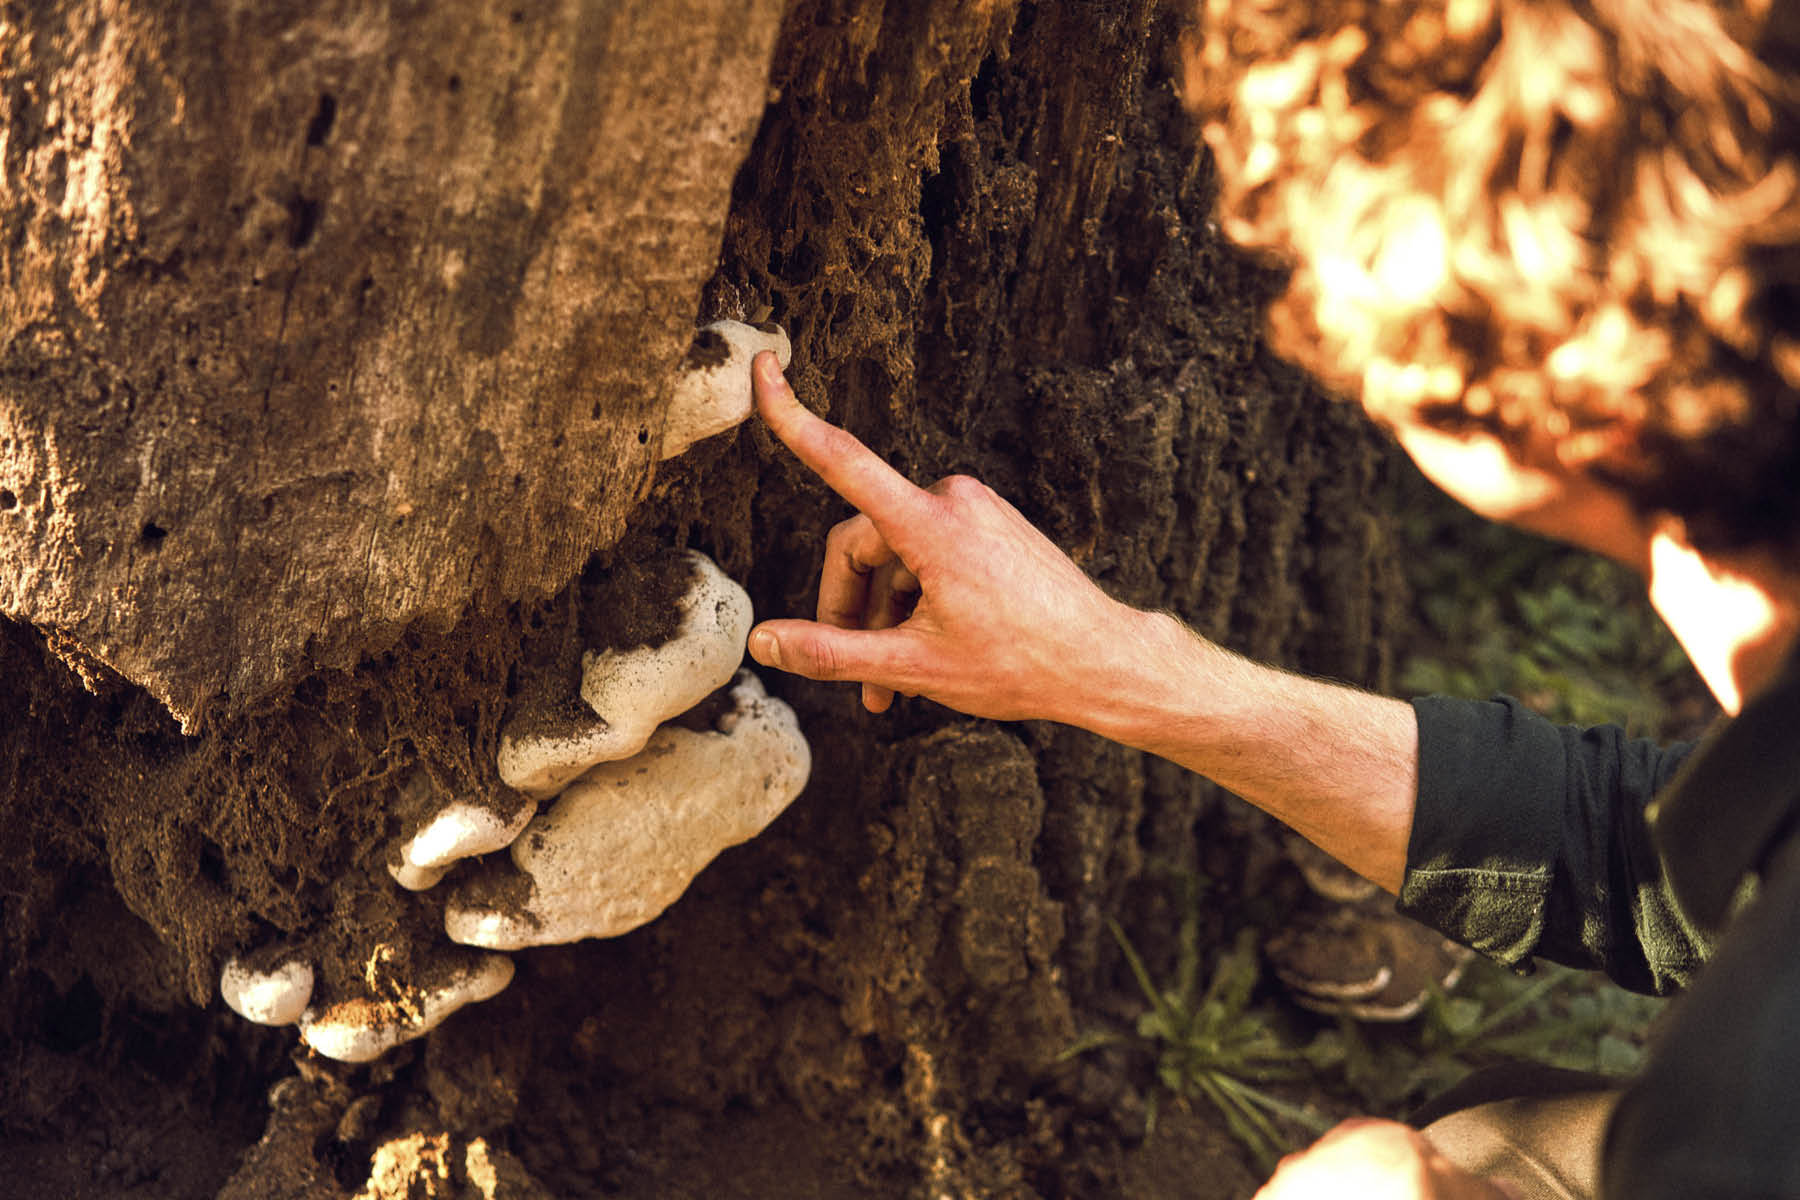 A photograph of Merlin Sheldrake pointing at a mushroom